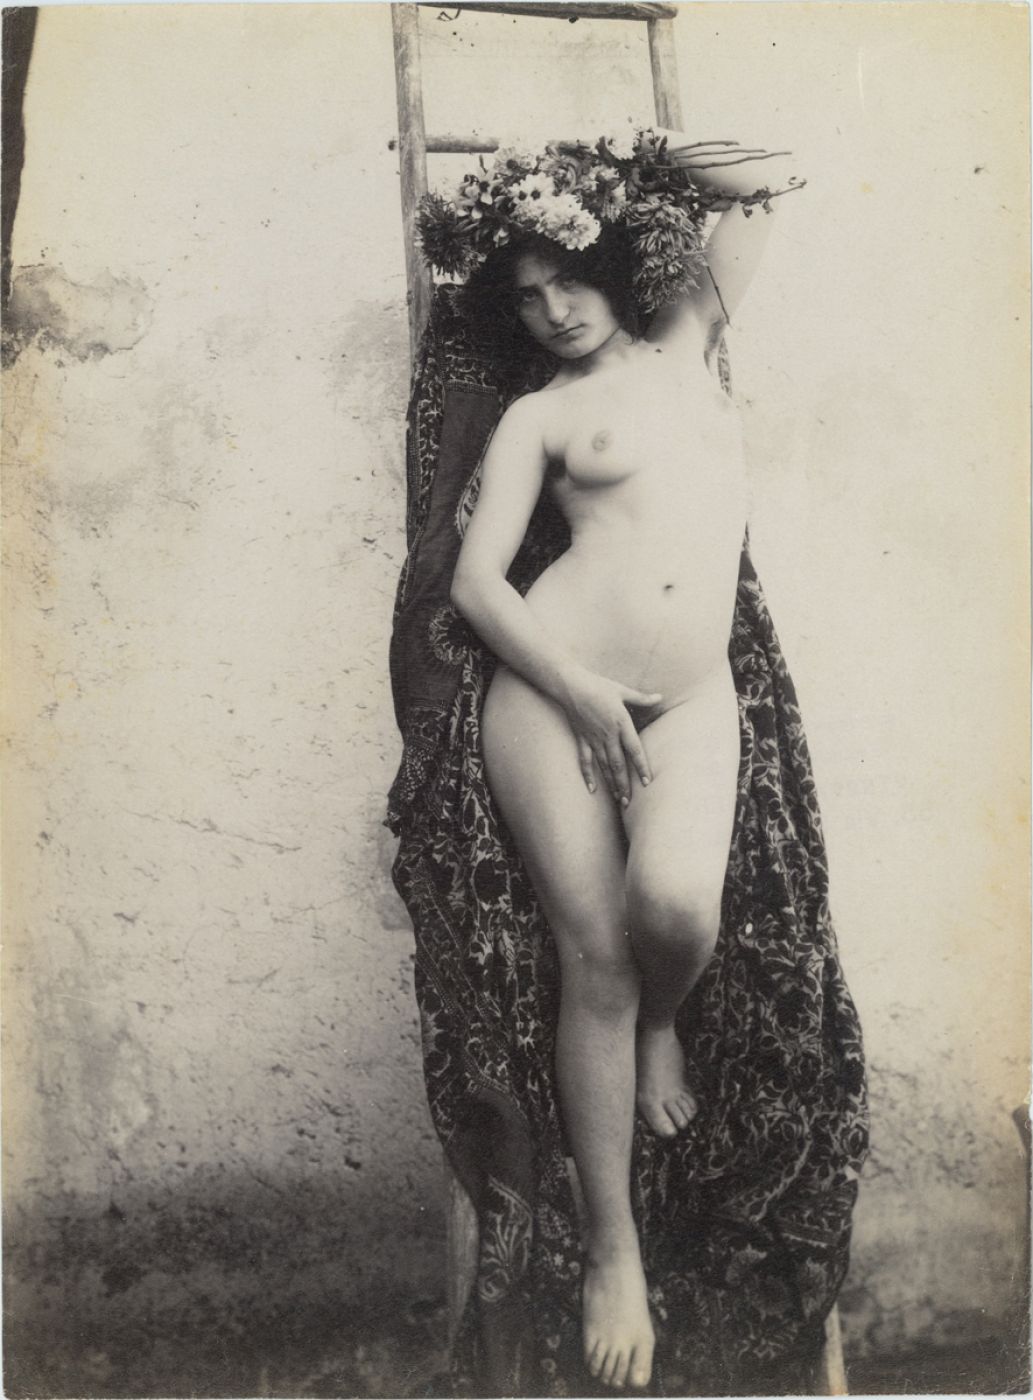 Vincenzo Galdi, “Untitled”, 1890 ca.